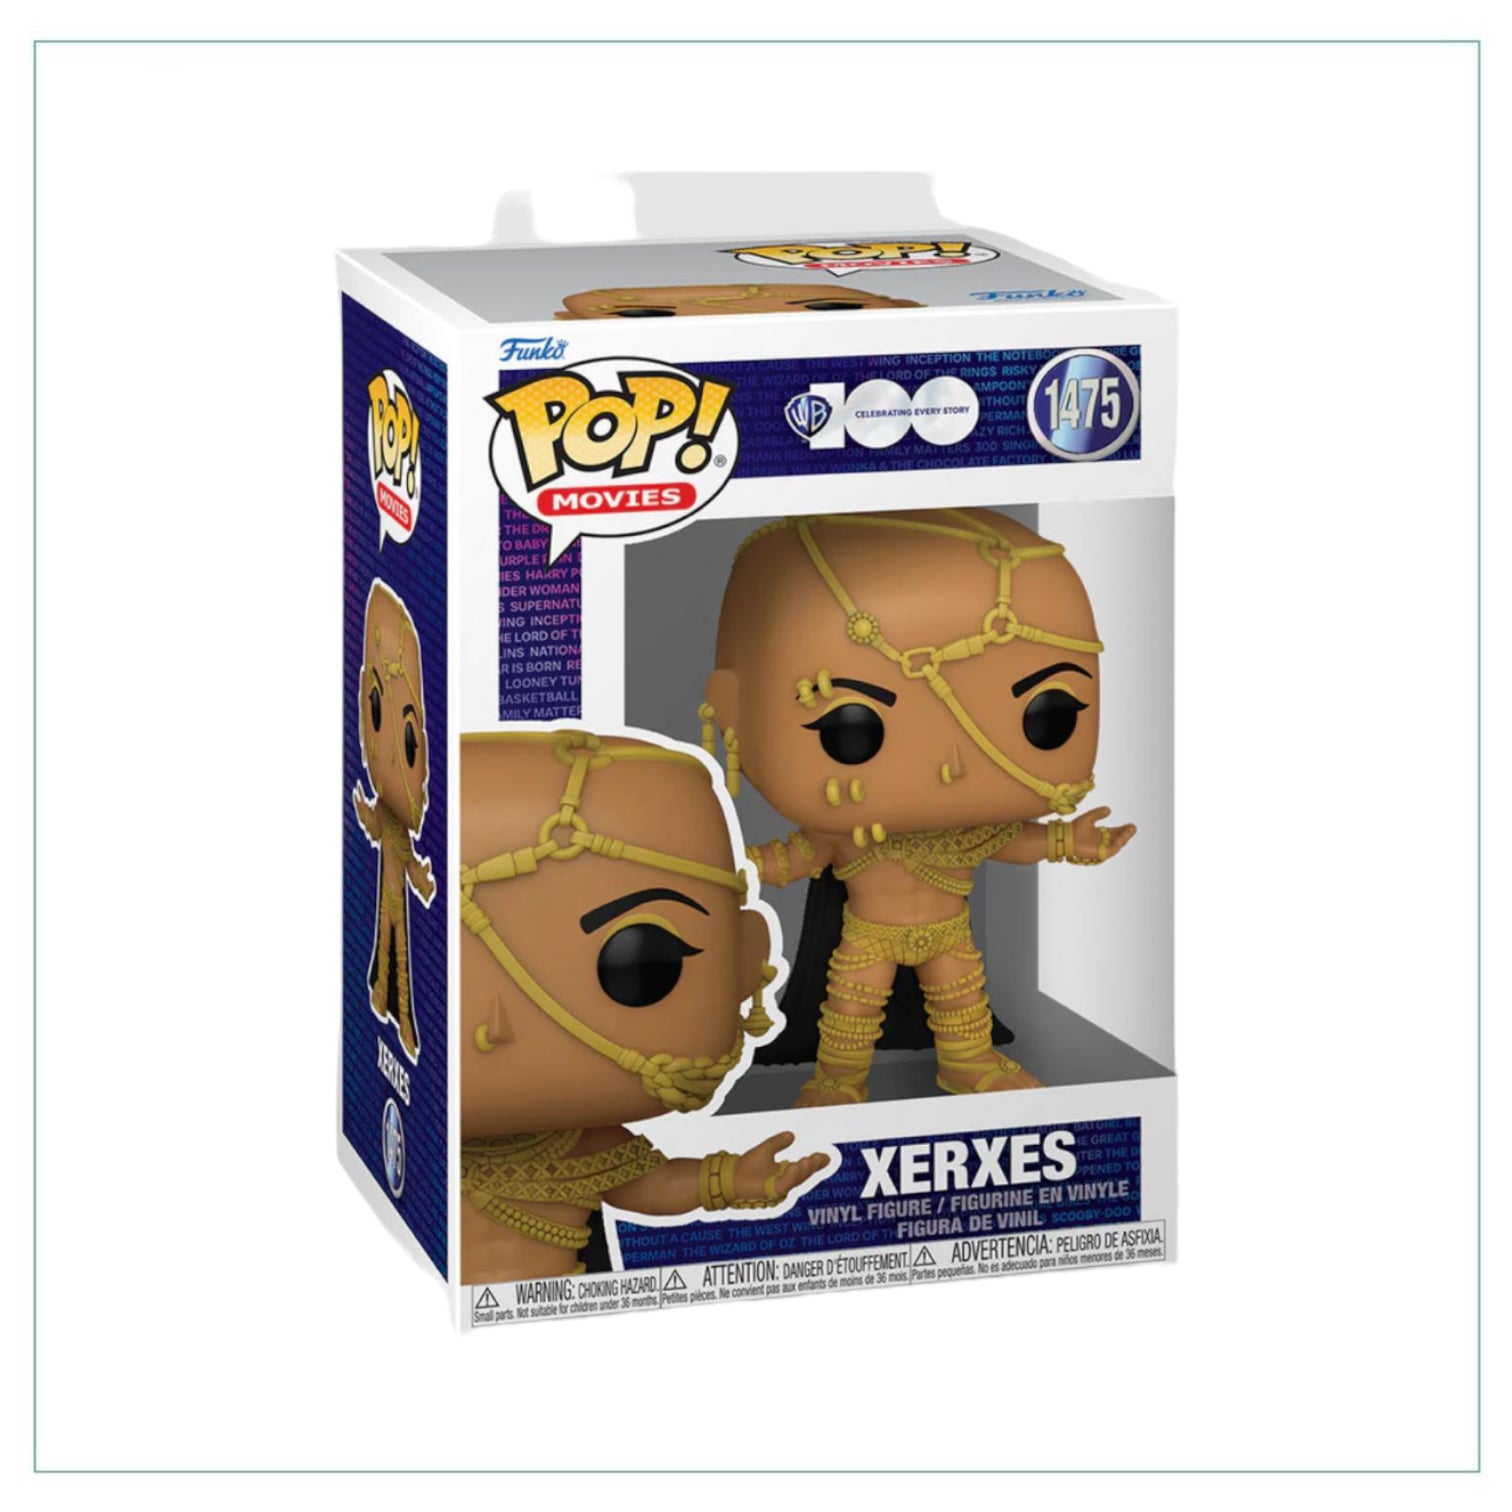 Xerxes #1475 Funko Pop! - WB100